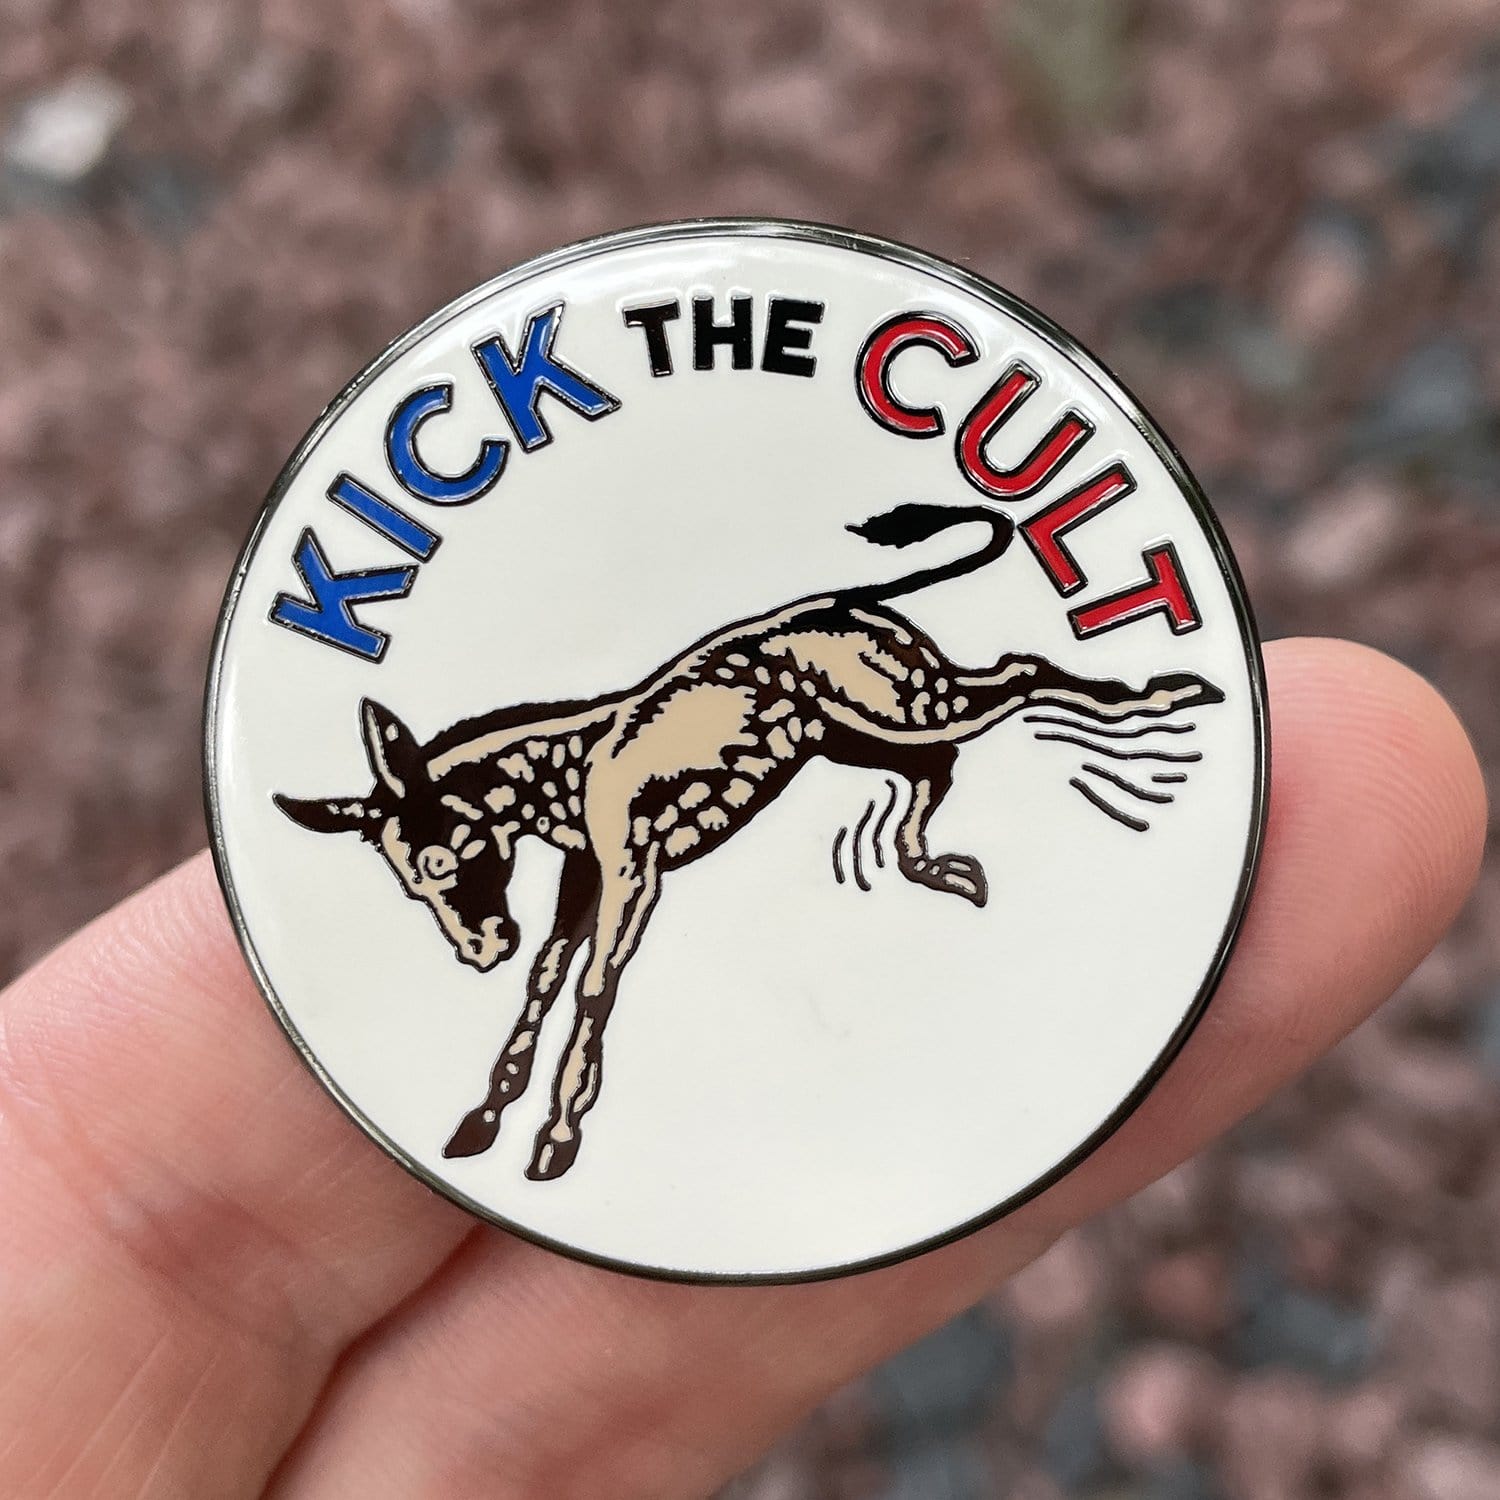 Kick the Cult Pin